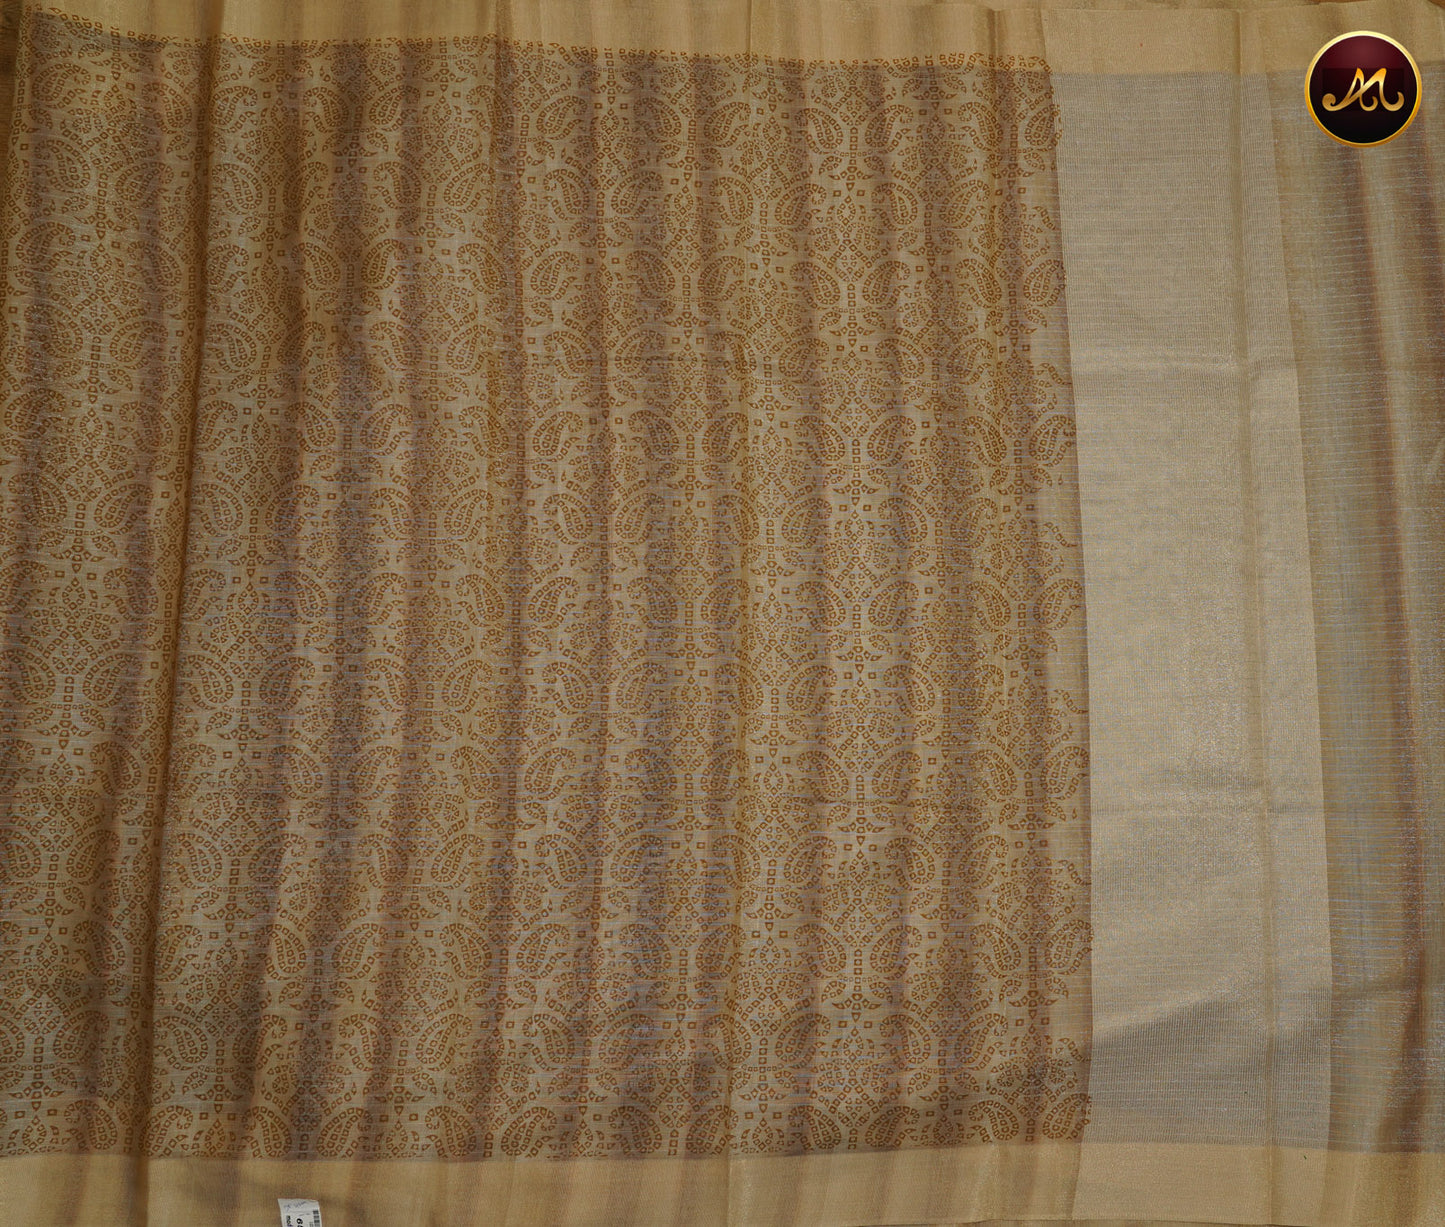 Gold tissue saree in with light brown bandini prints and goldzari border